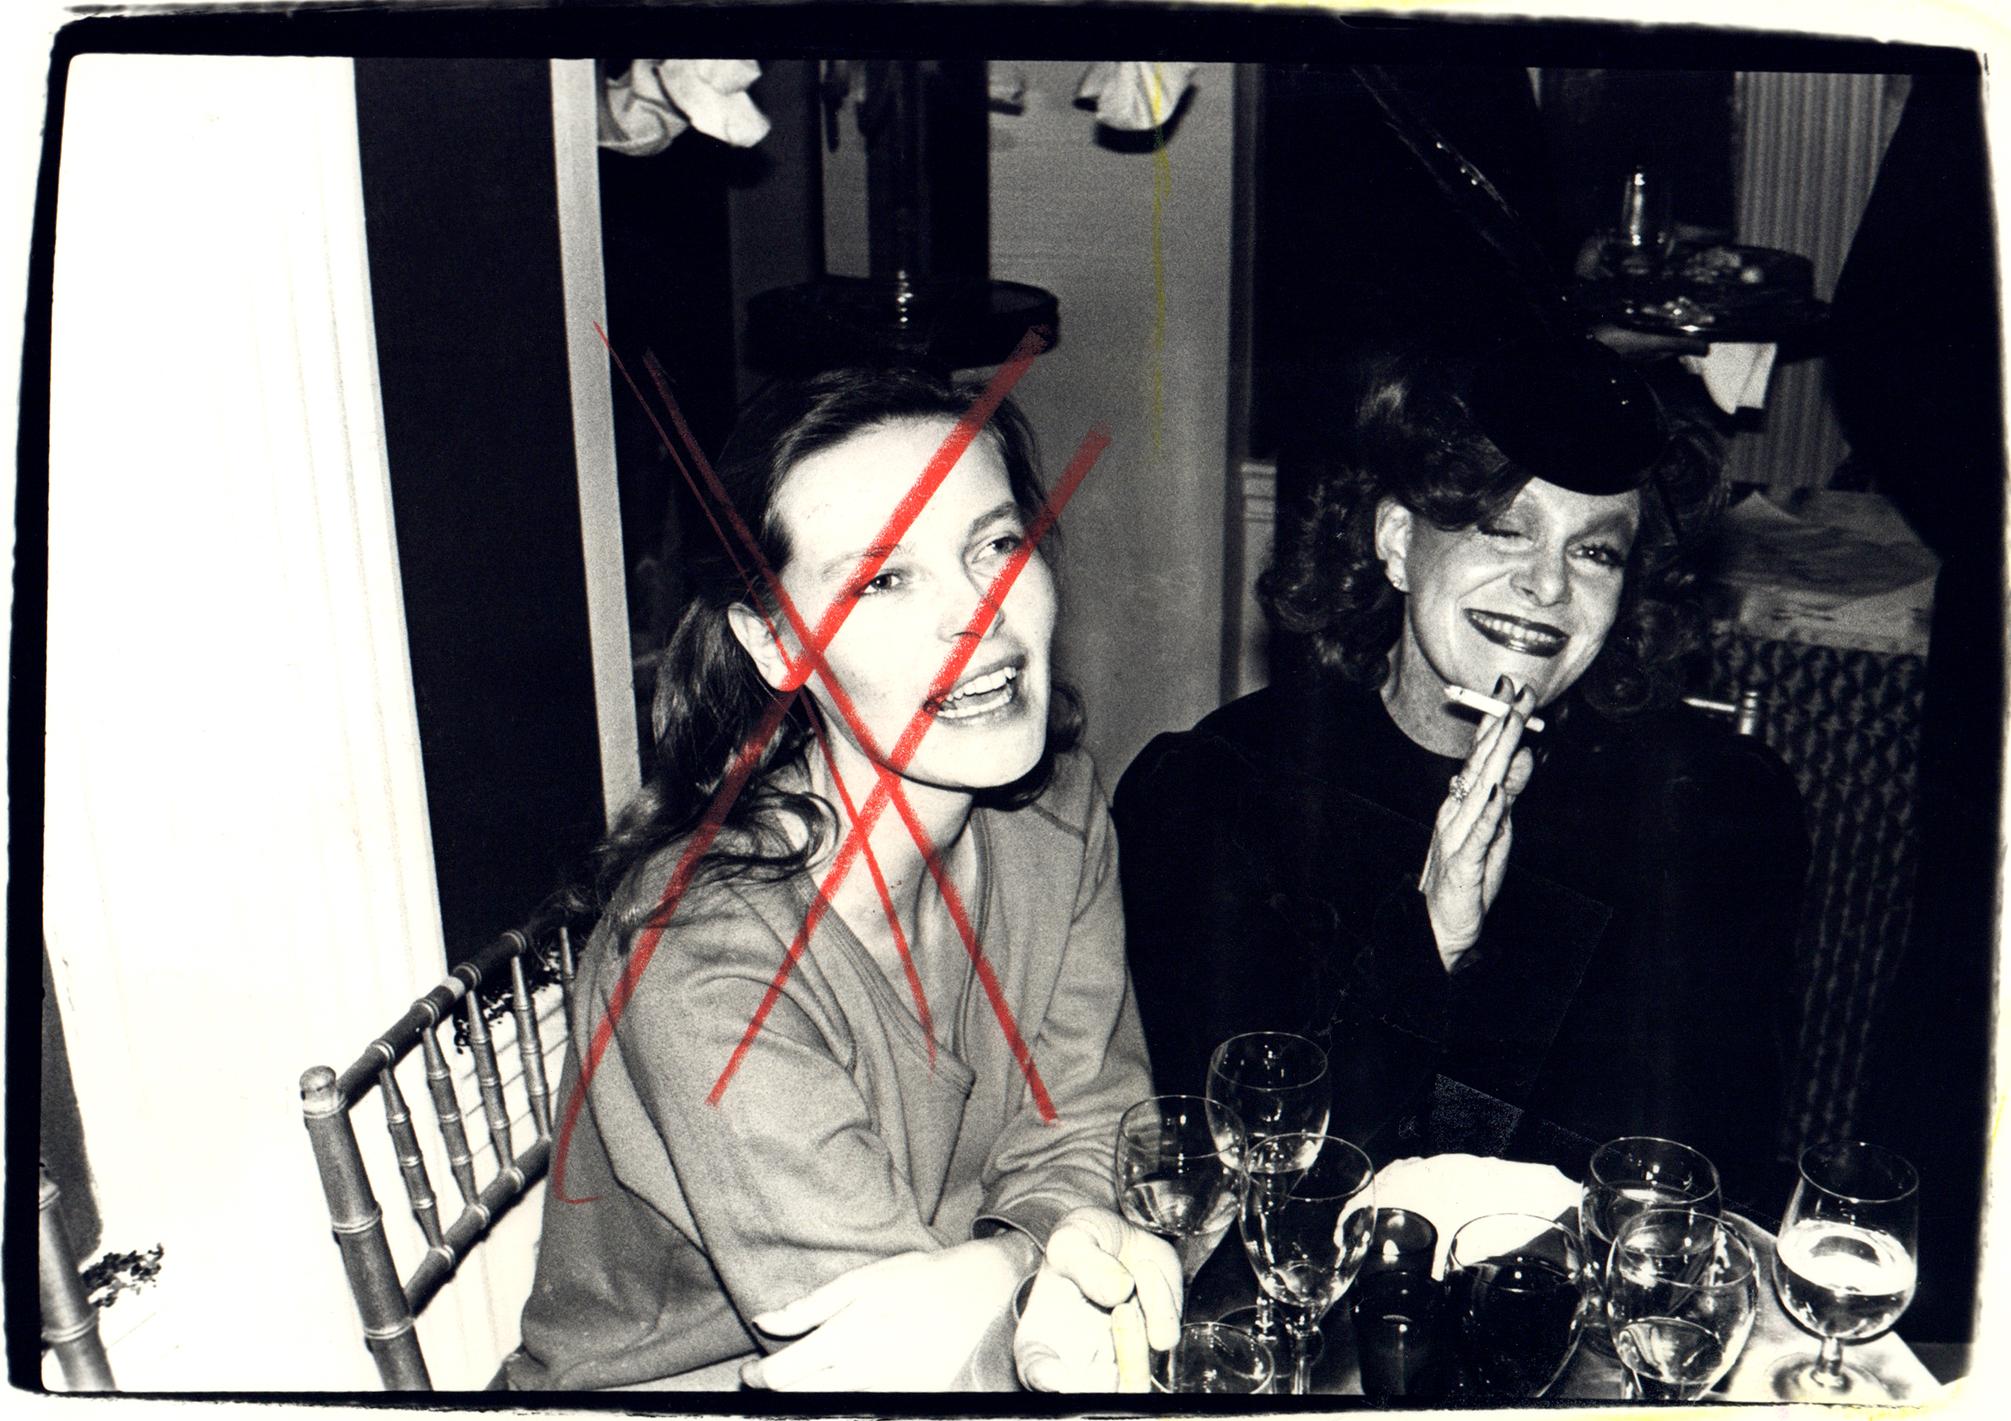 Andy Warhol Portrait Photograph - Suzie Frankfurt and a Woman